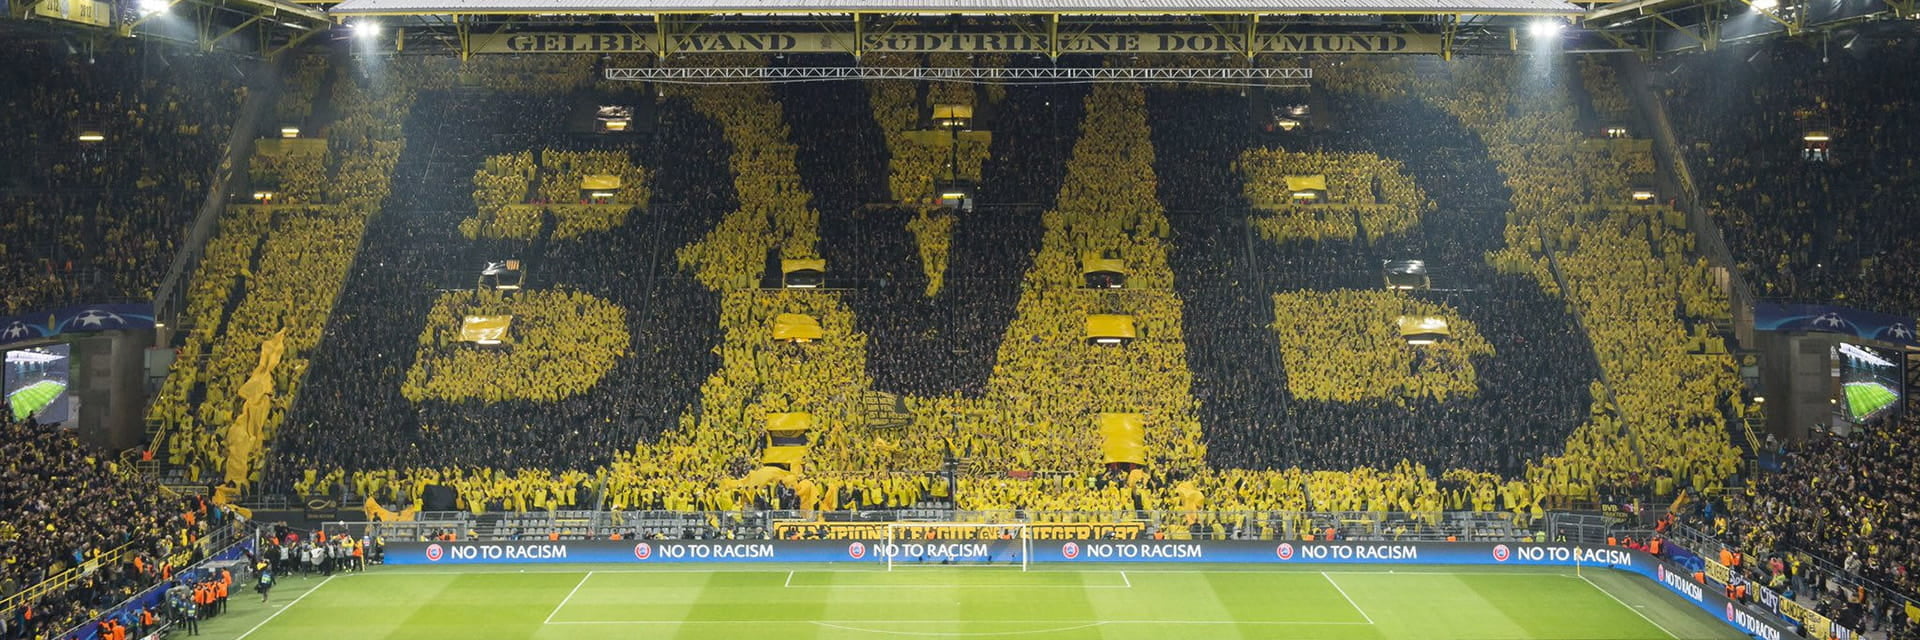 Borussia Dortmund - Manchester City, 2 oktoberom 21:00